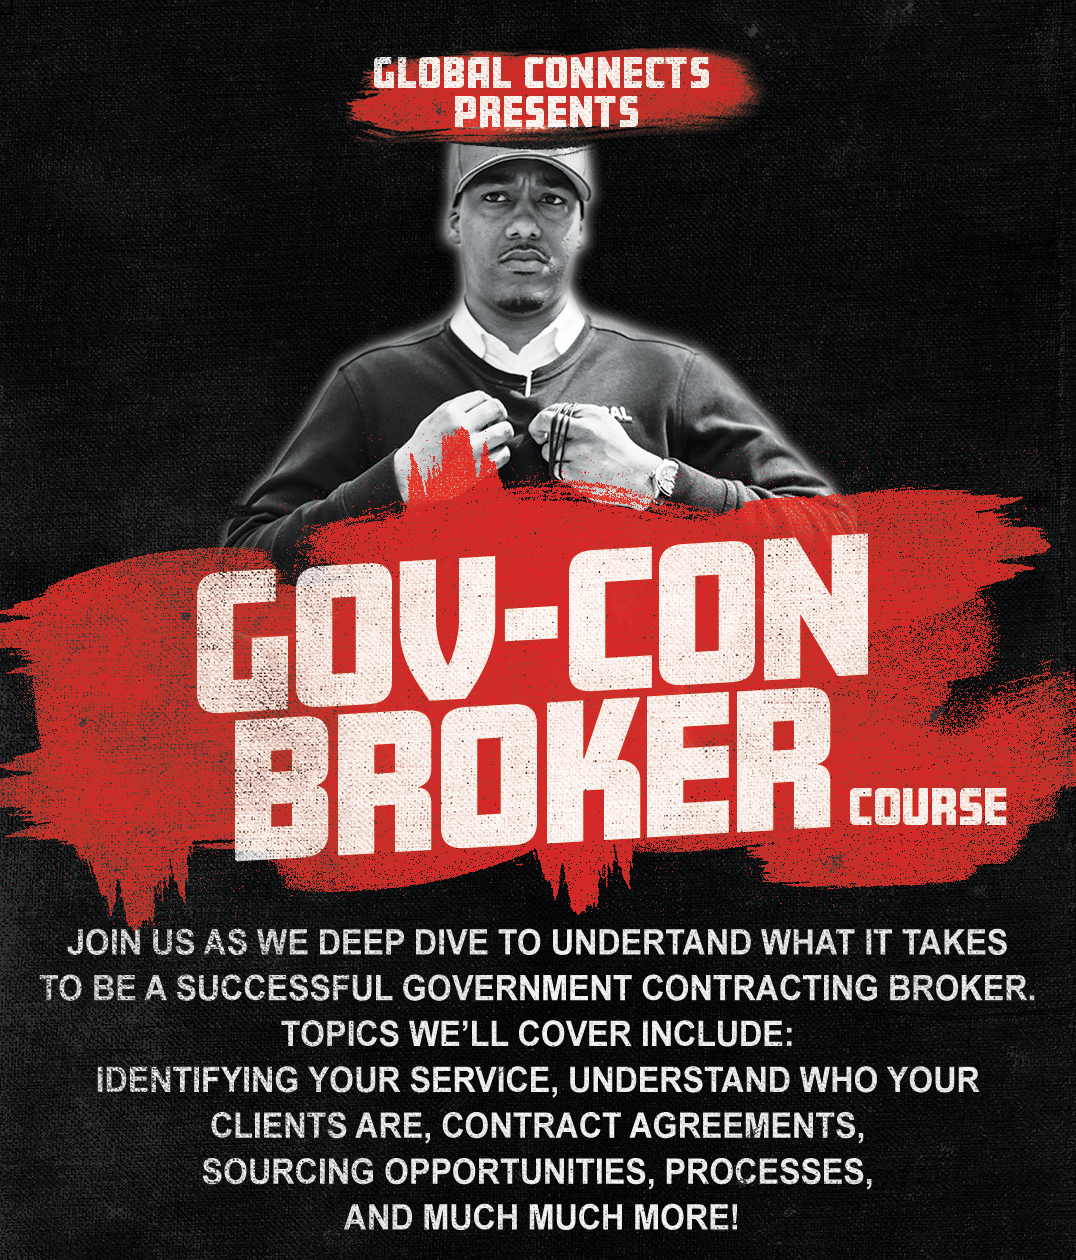 Gov-Con Broker Course